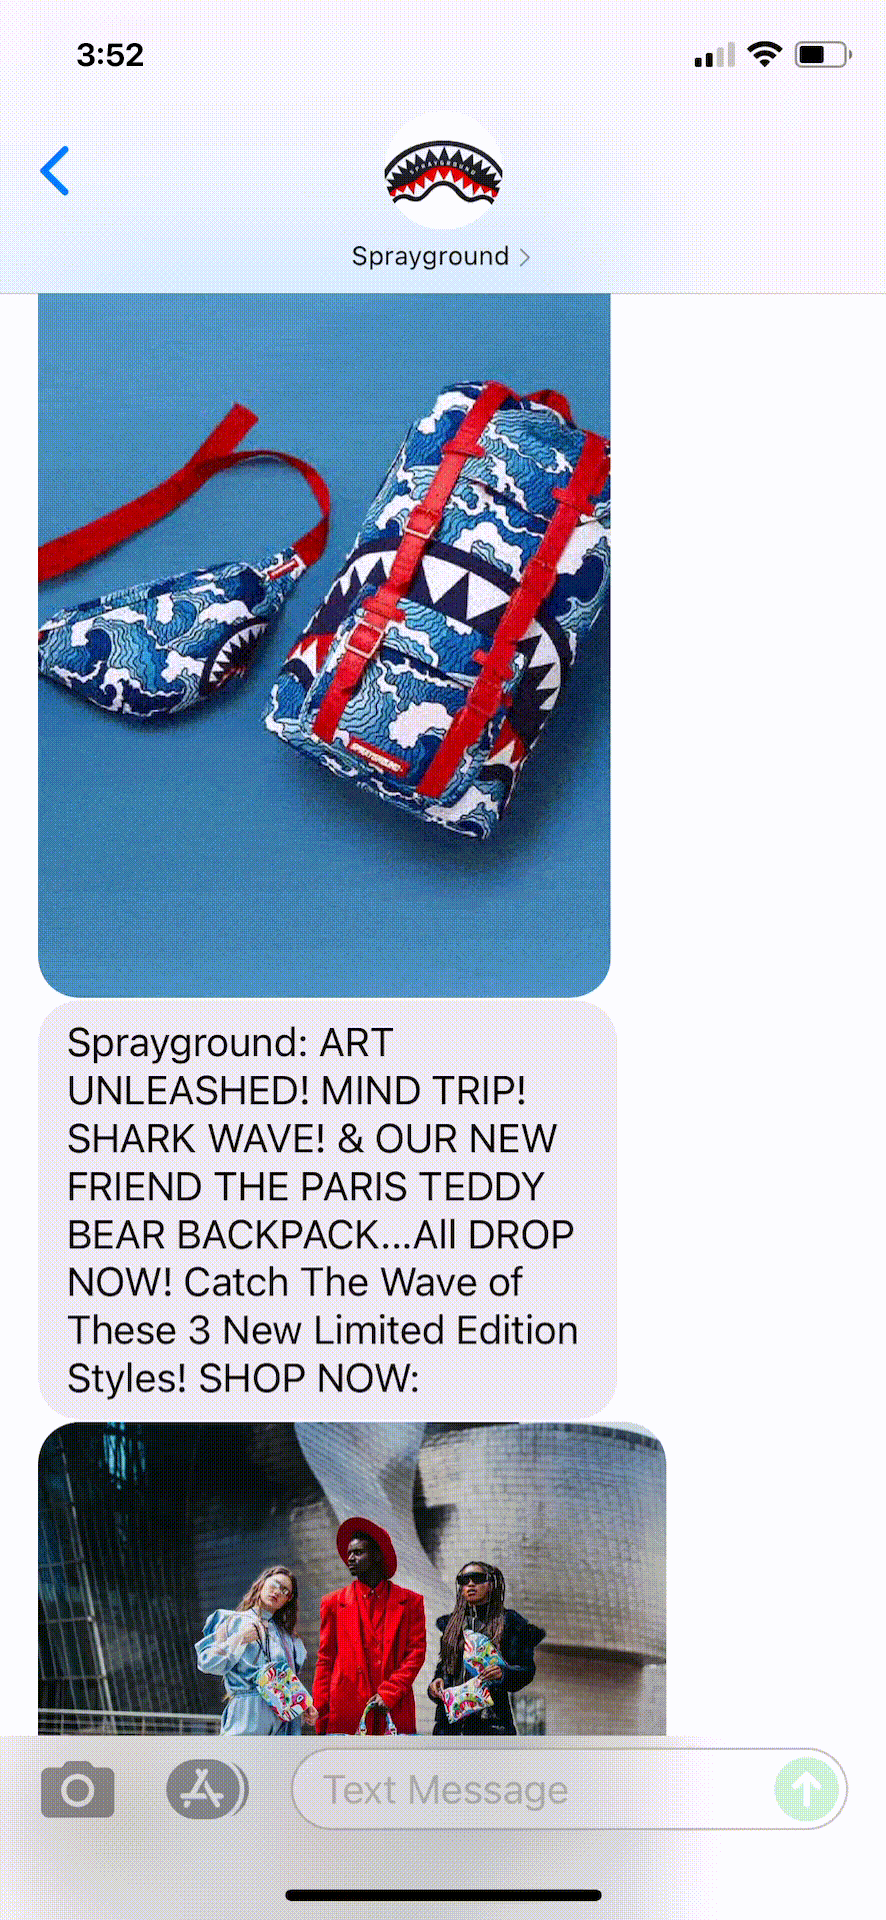 Sprayground-Text-Message-Marketing-Example-07.21.2021